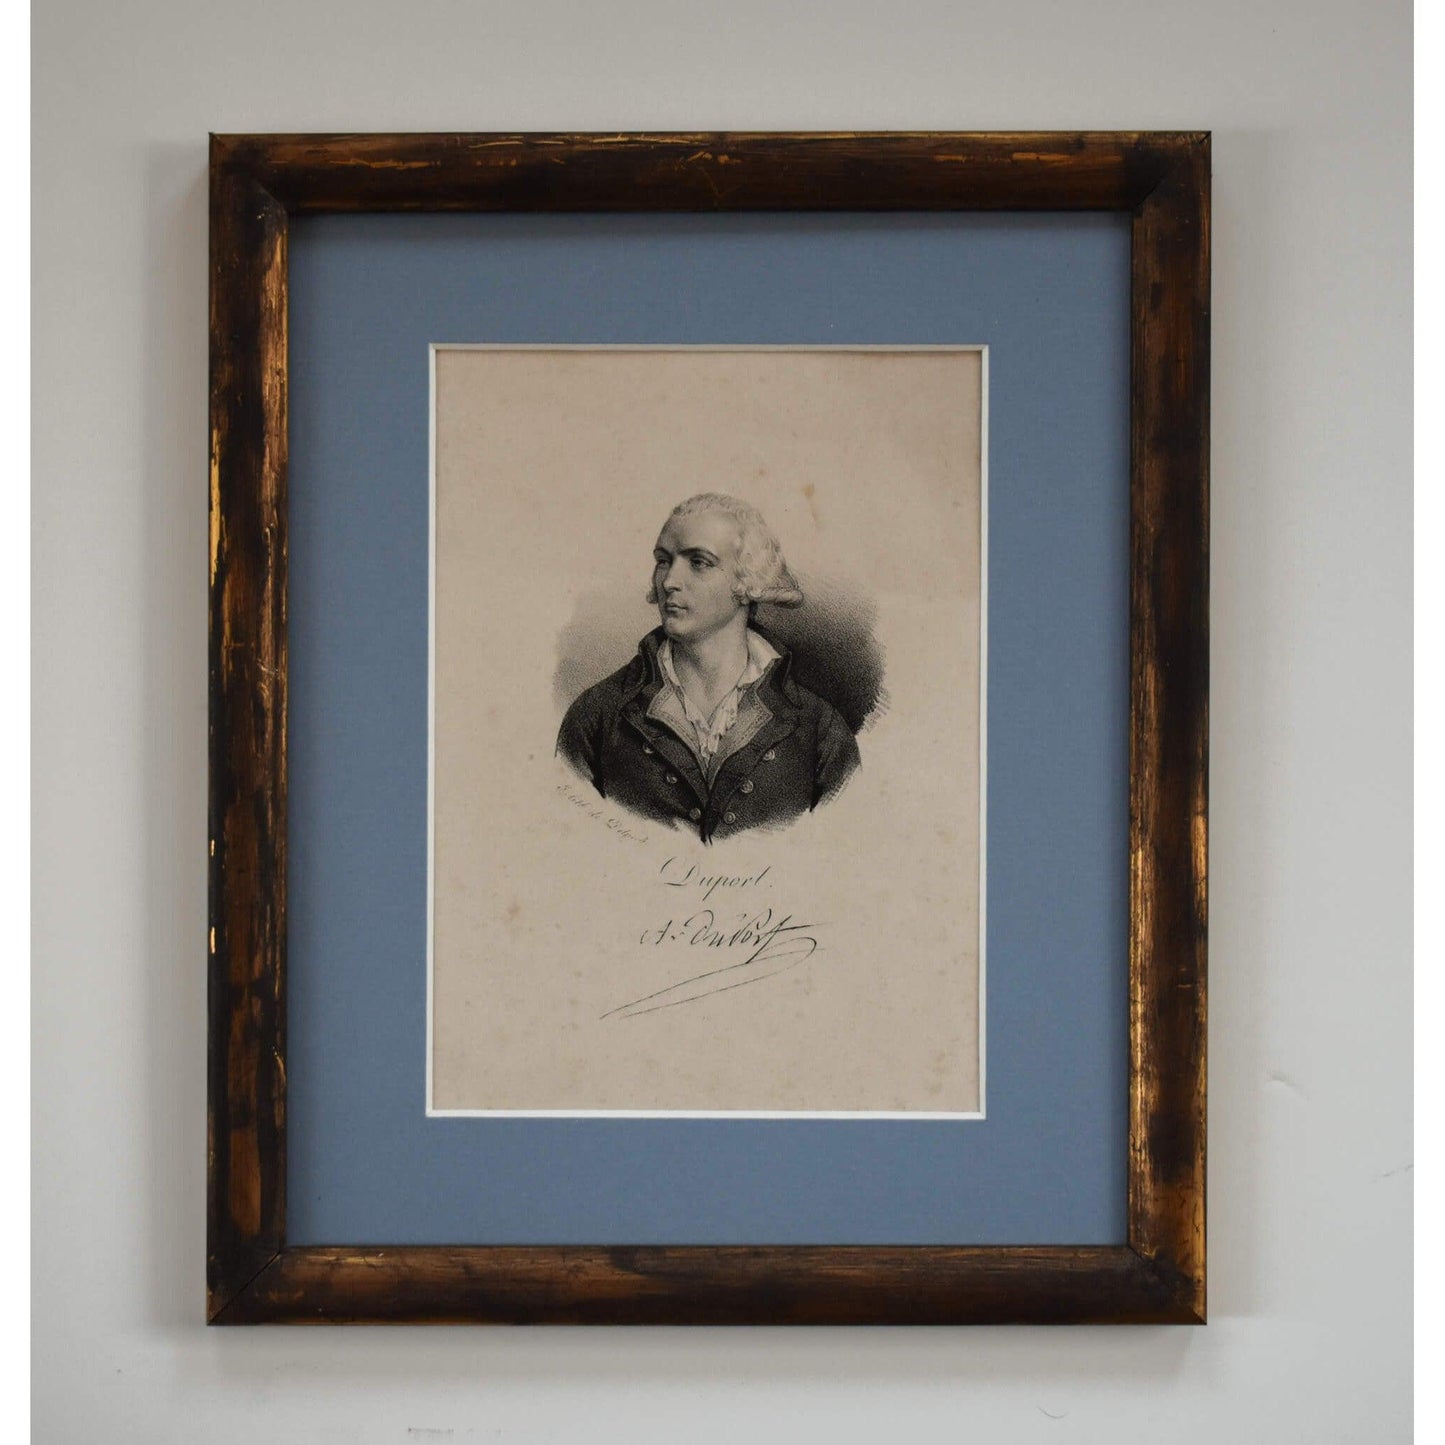 Antique lithograph print portrait of French lawyer Adrien Duport, by François Delpech. For sale at Winckelmann Gallery.